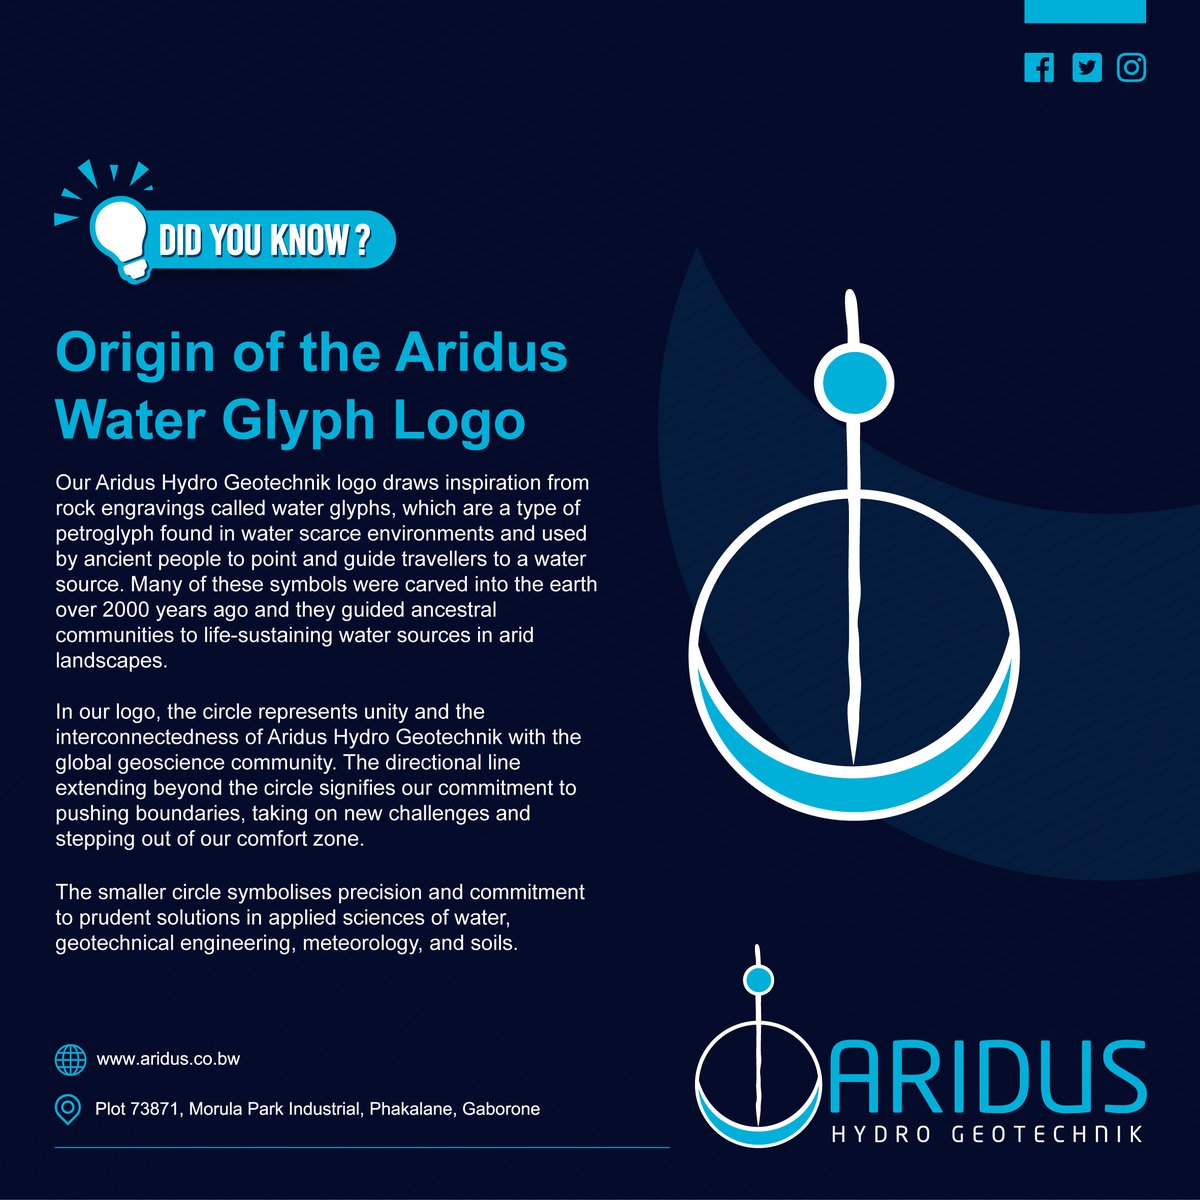 Guided by ancient wisdom, shaping the future!
#AridusHydroGeotechnik #WaterGlyphLogo #AncientWisdom